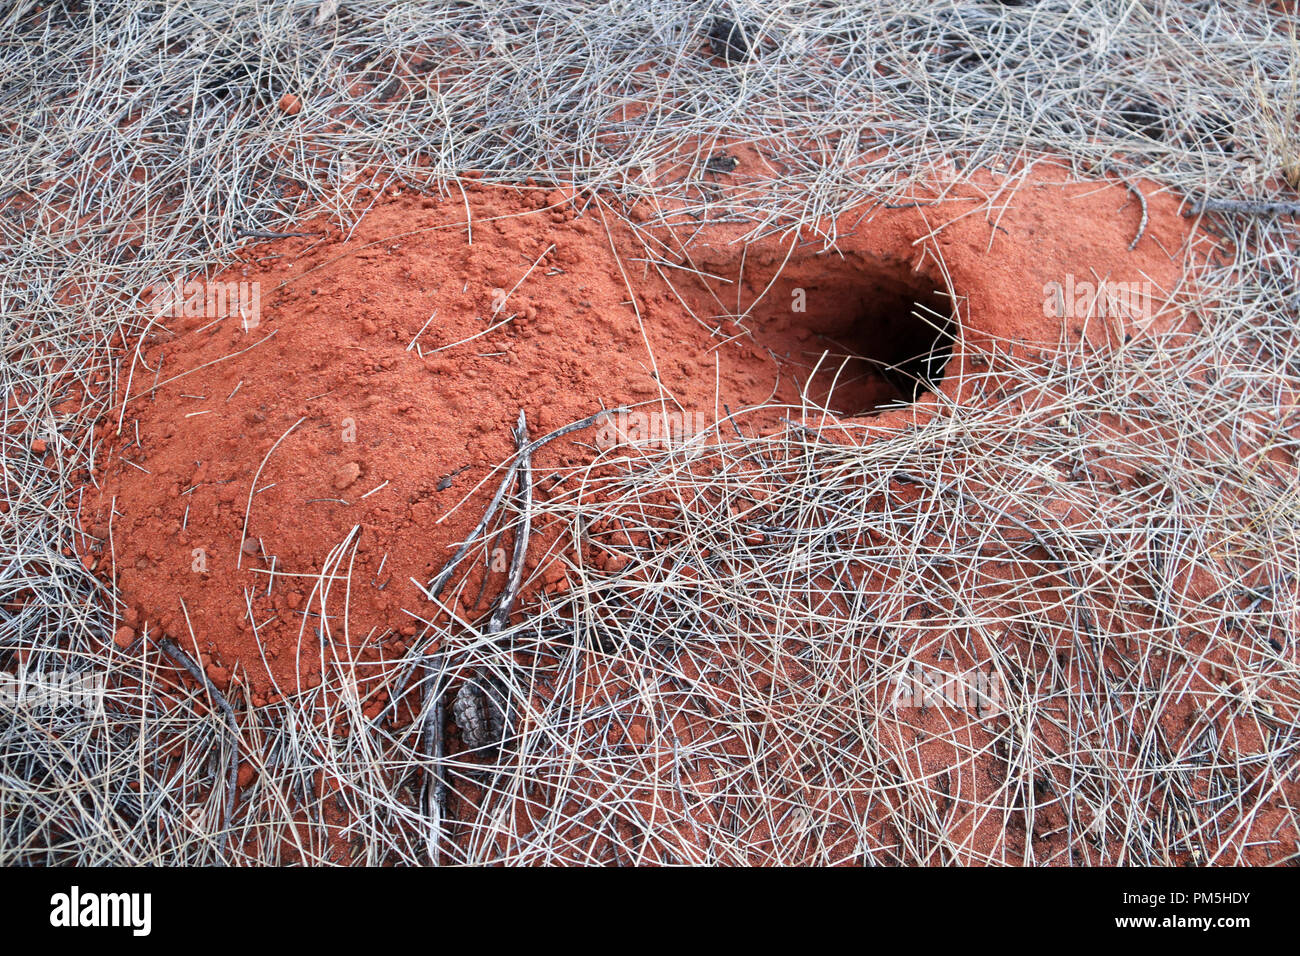 Animal burrow in the Australian outback surrounded by desert oak tree needles. Stock Photo